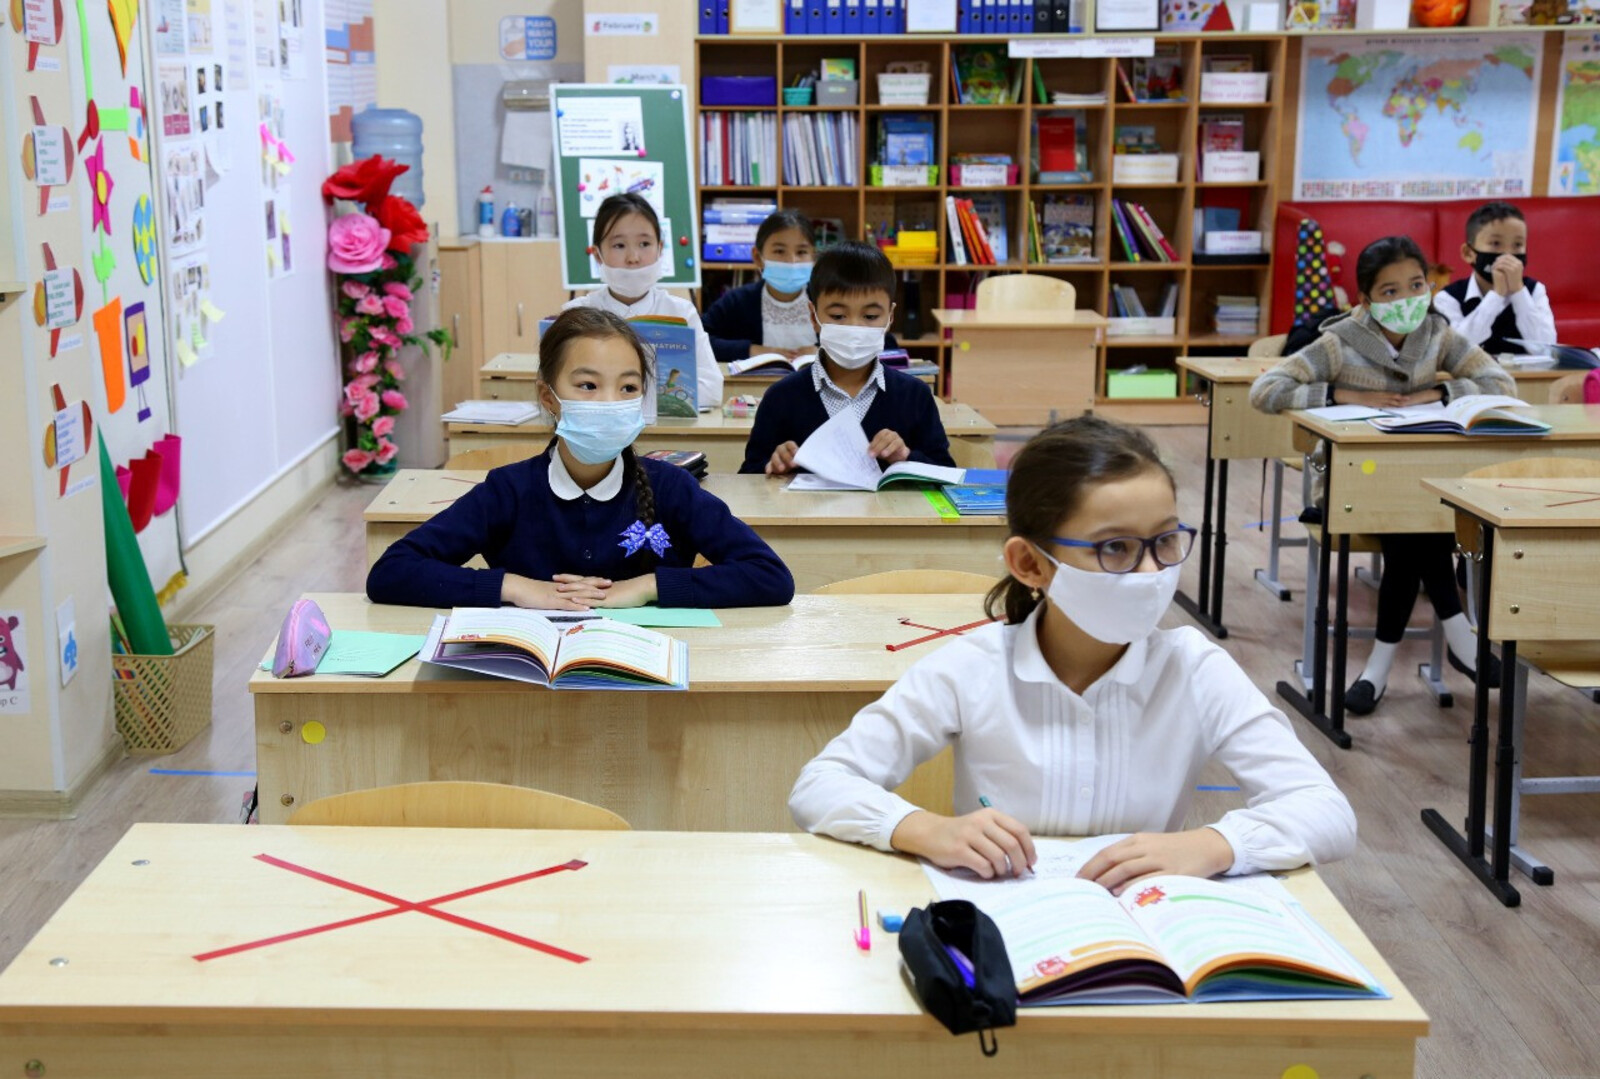 Школа ковид. Ученики 5 класса. Дети в школе Казахстан. Ученики в классе в масках. Школы в Казахстане.